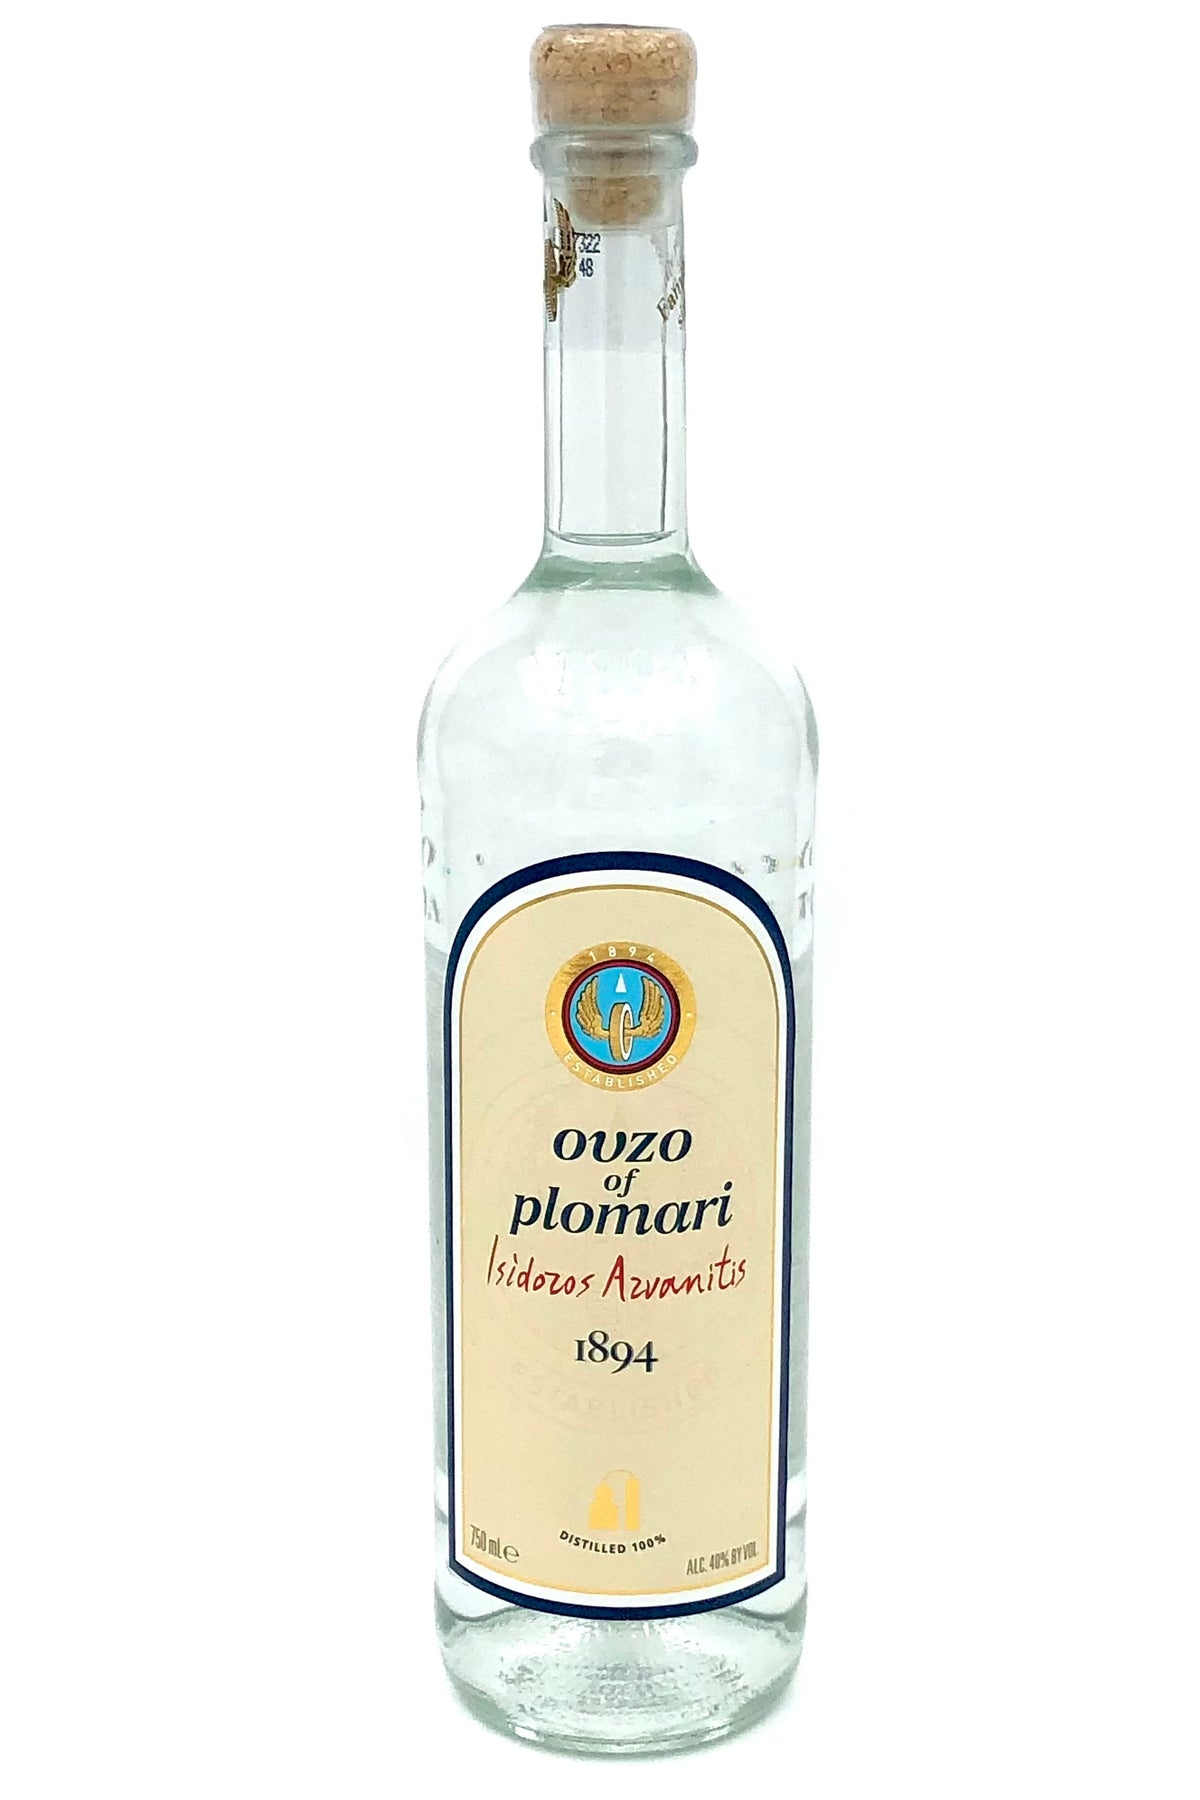 Buy Ouzo of Plomari 1894 Isidoros Online Arvanitis